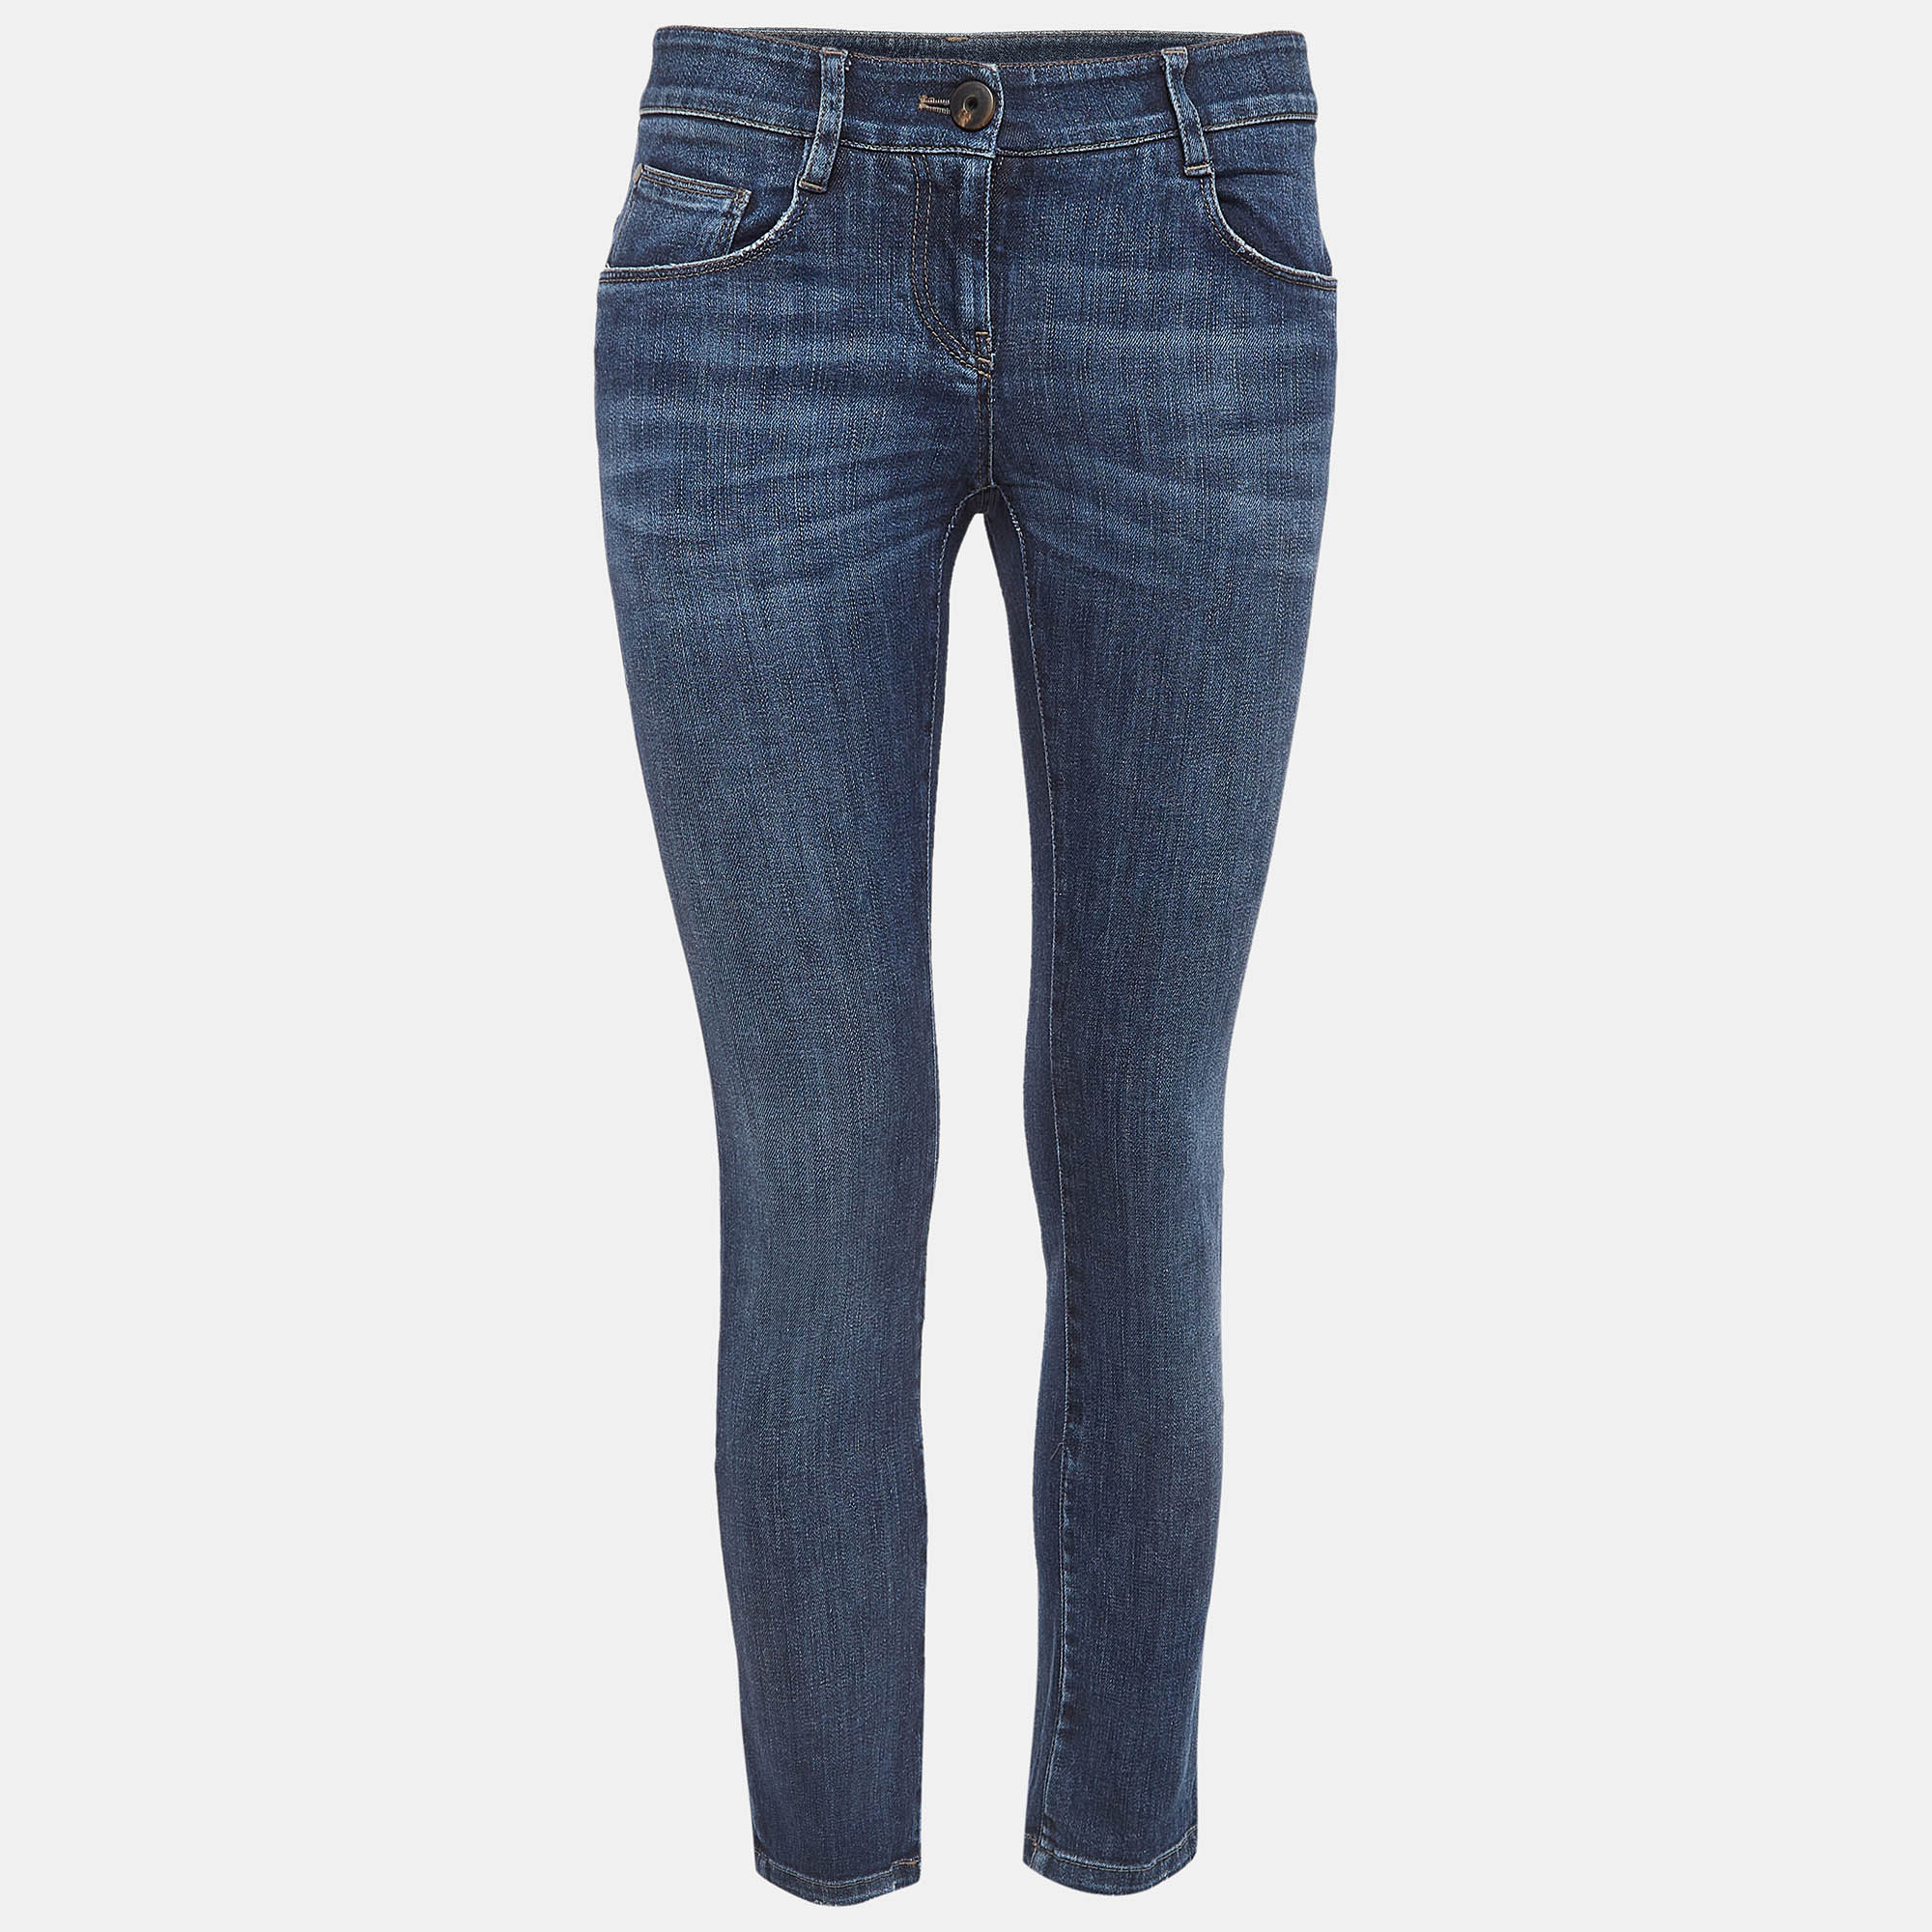 Pre-owned Brunello Cucinelli Navy Blue Denim Skinny Jeans S Waist 28"